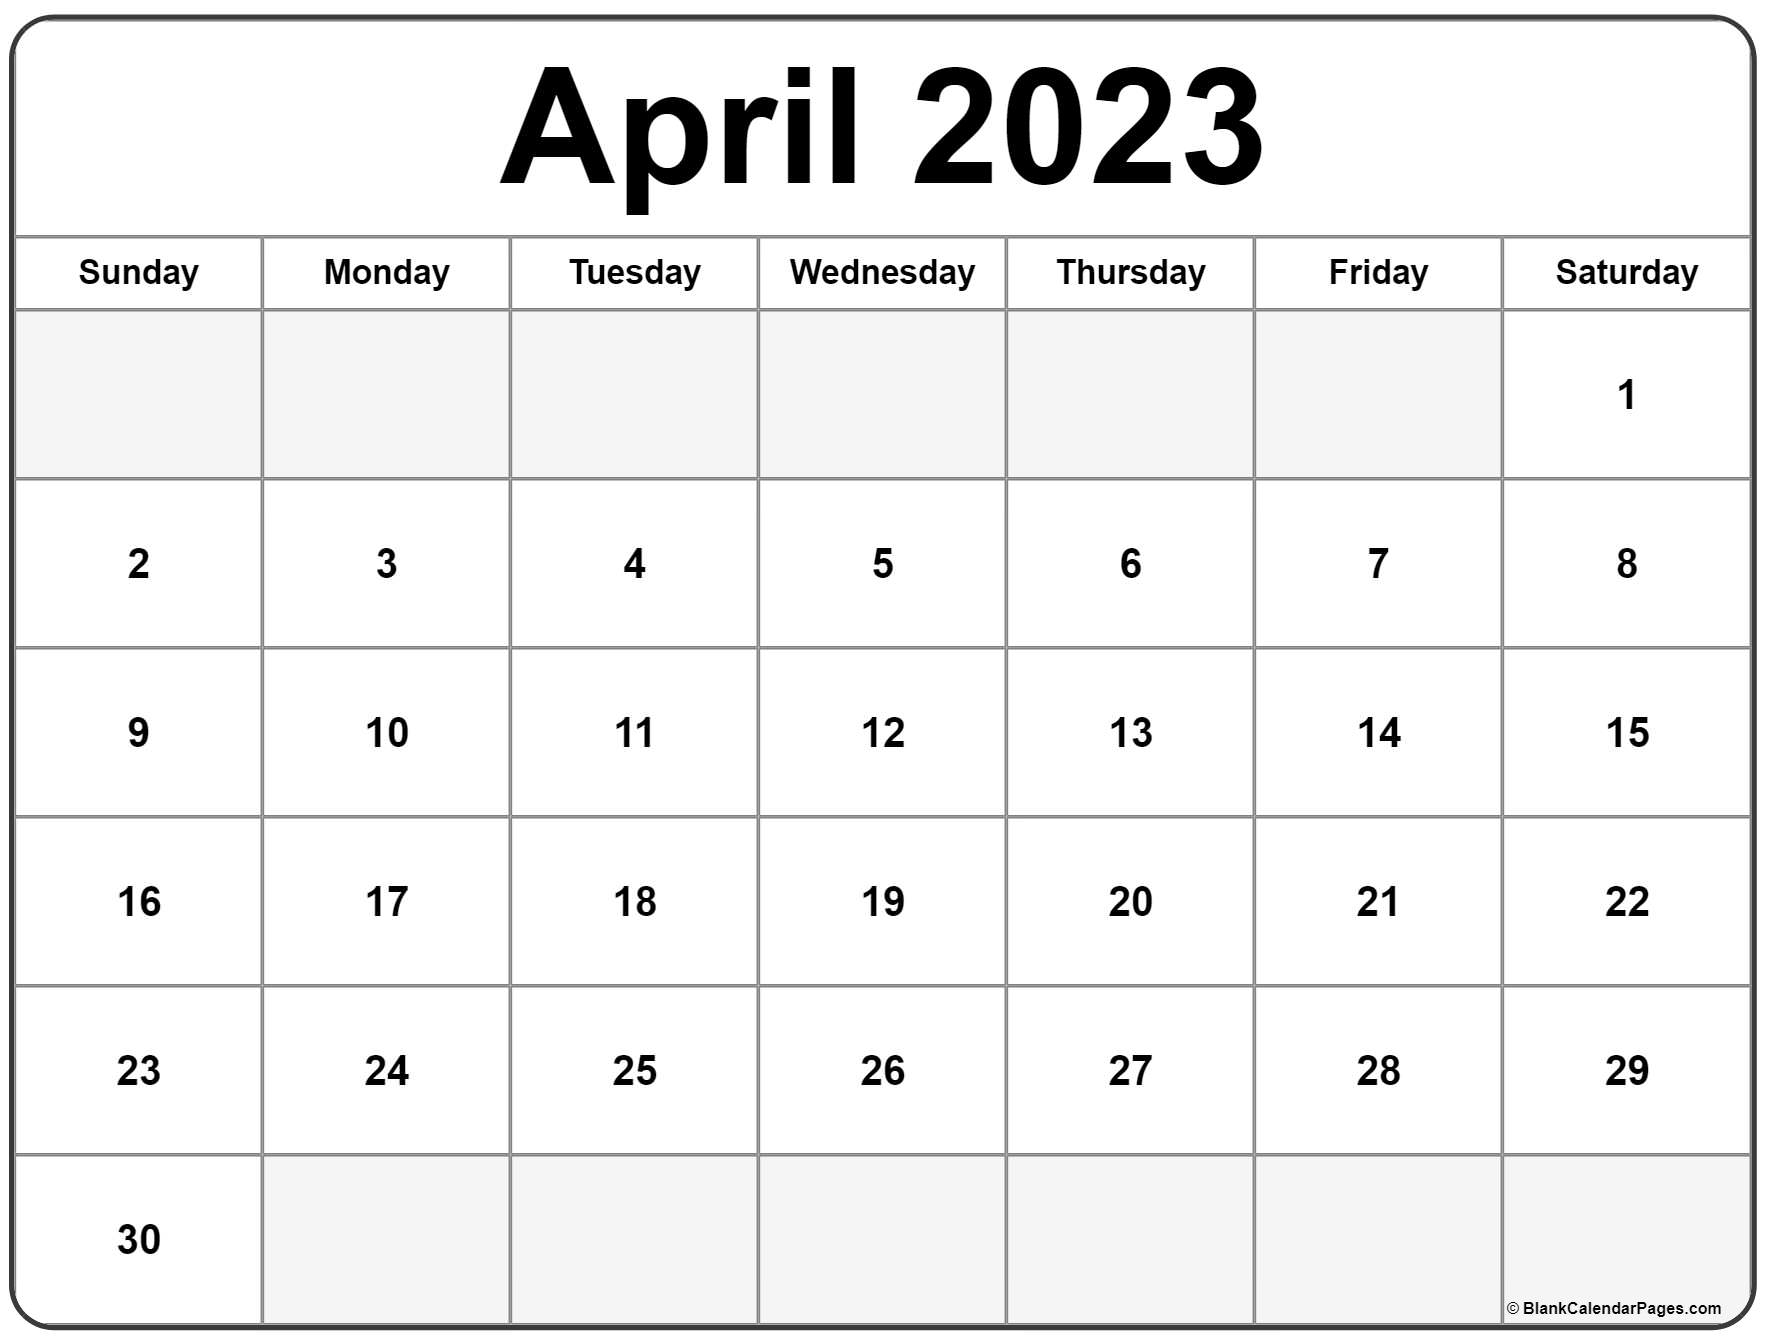 Blank Calendar Page April 2023 2022